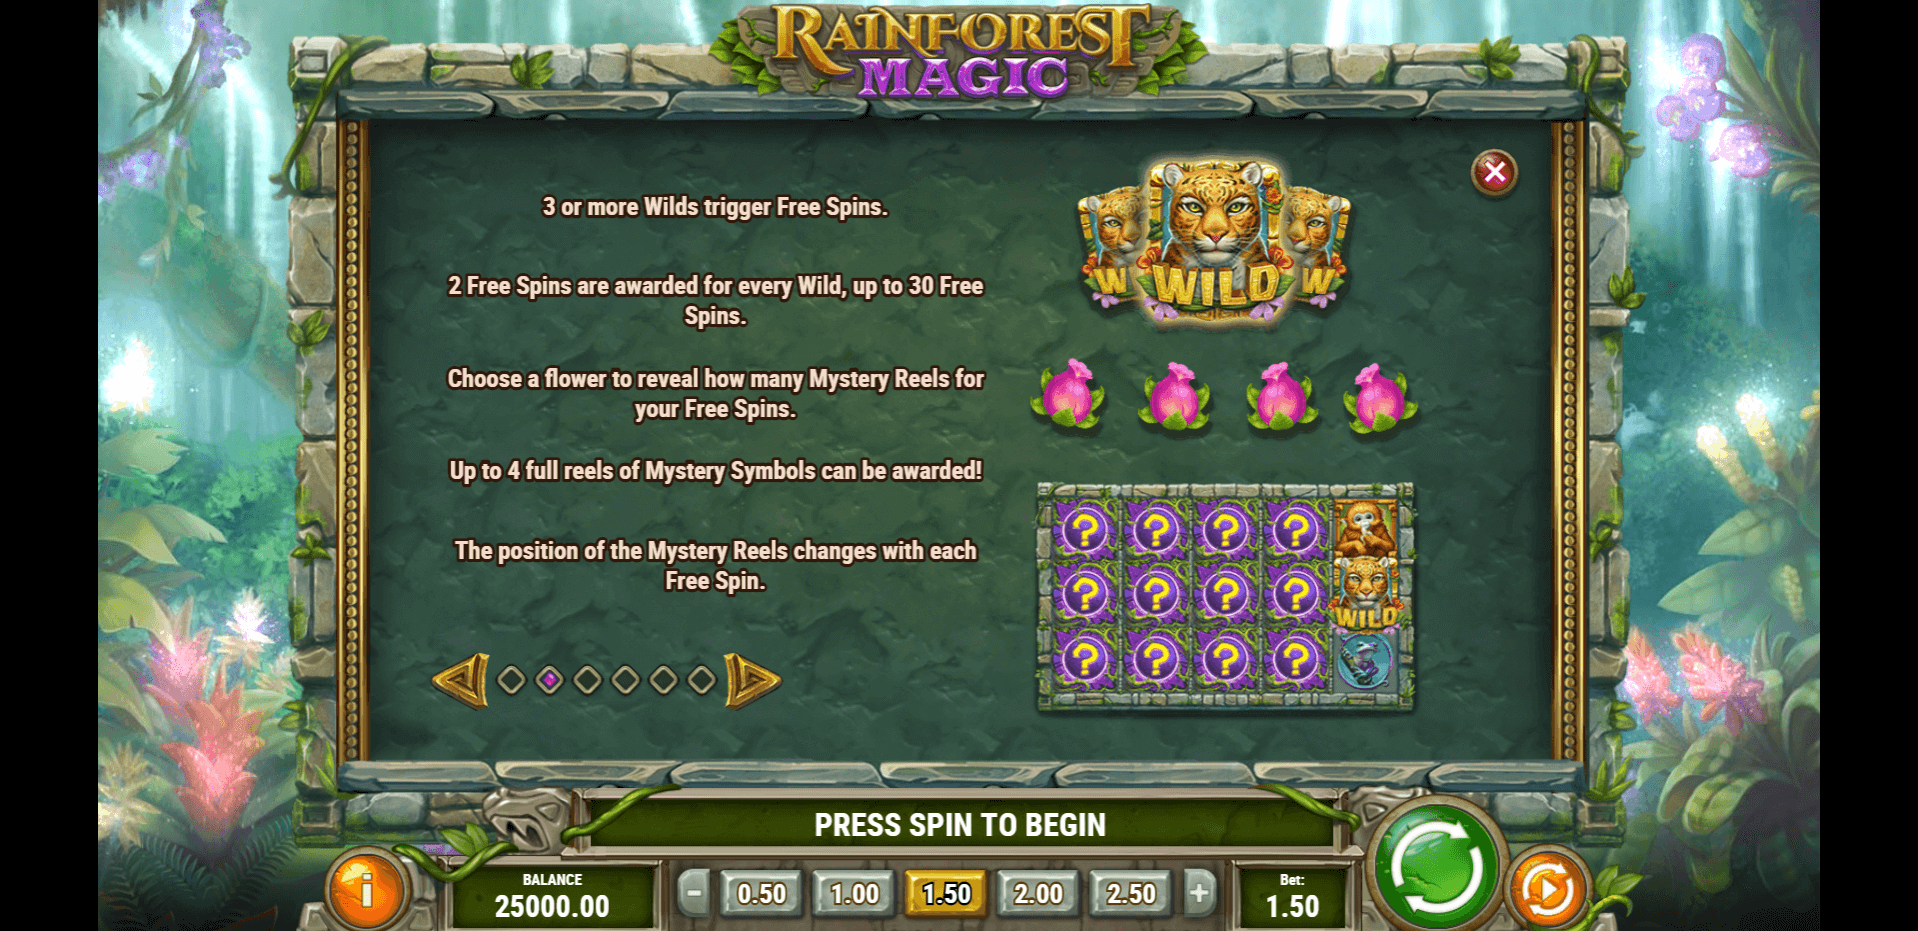 rainforest magic slot machine detail image 1